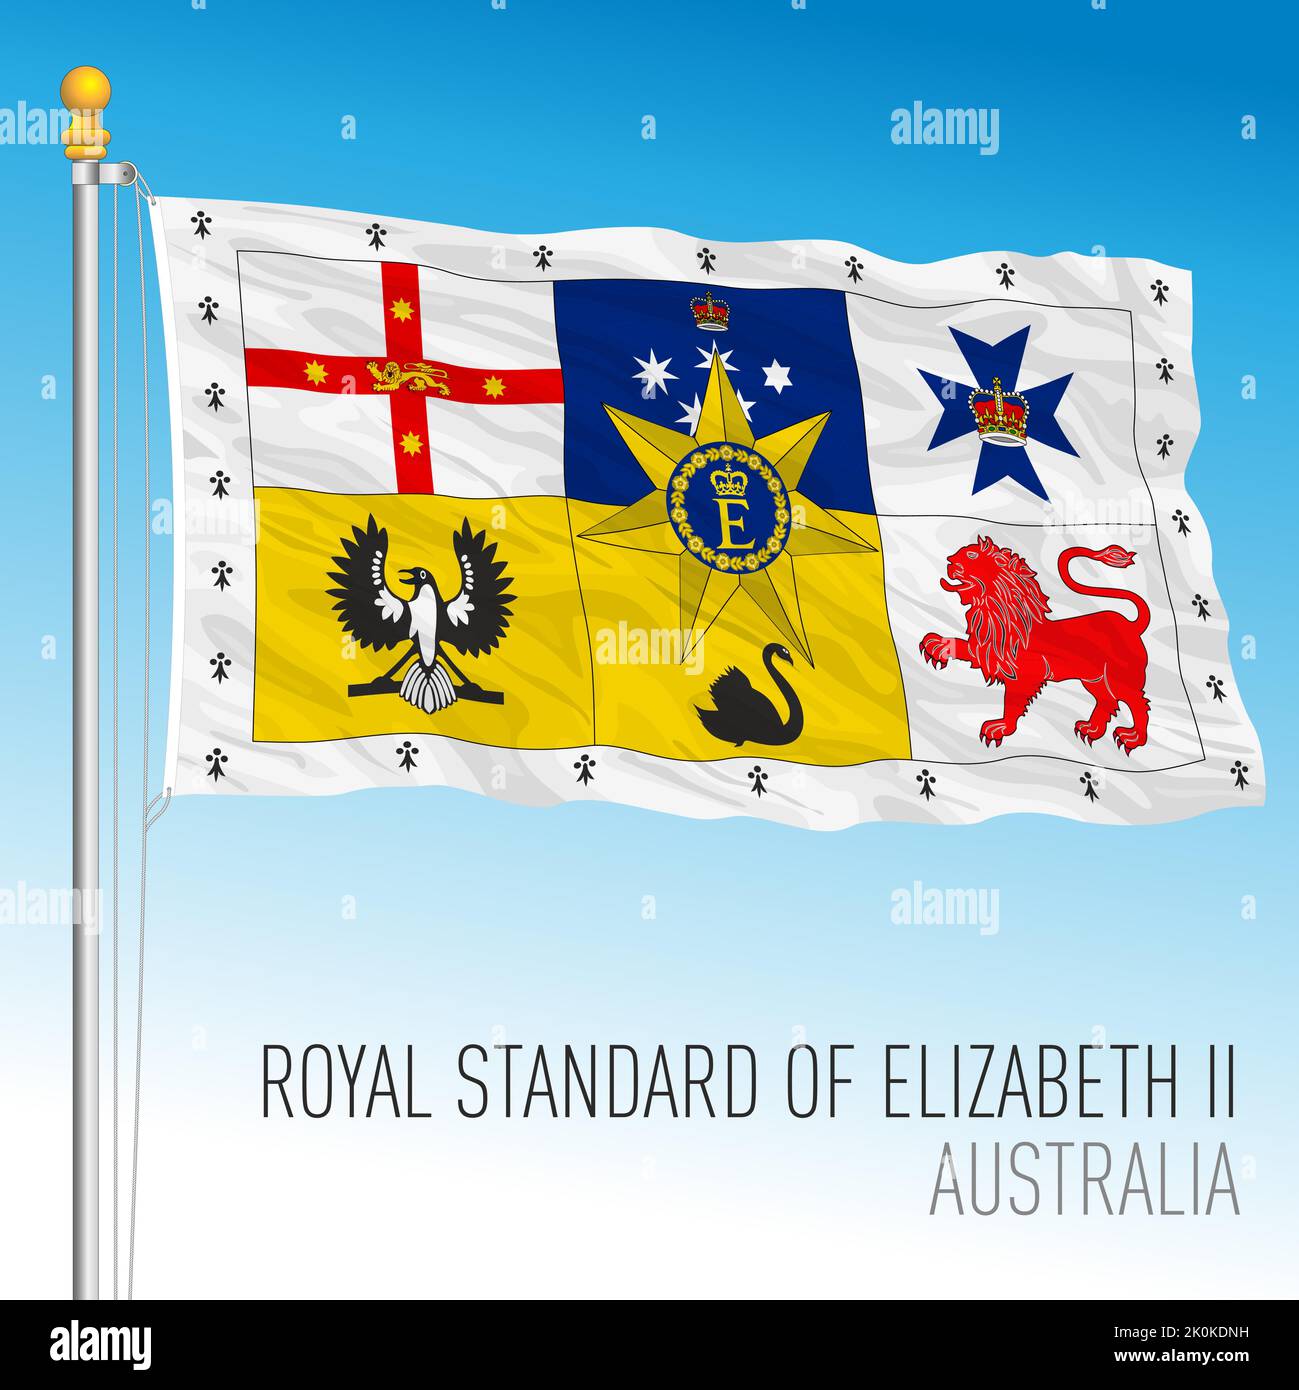 Australian Royal Standard of the Queen Elizabeth II, Australien, Vektorgrafik Stock Vektor